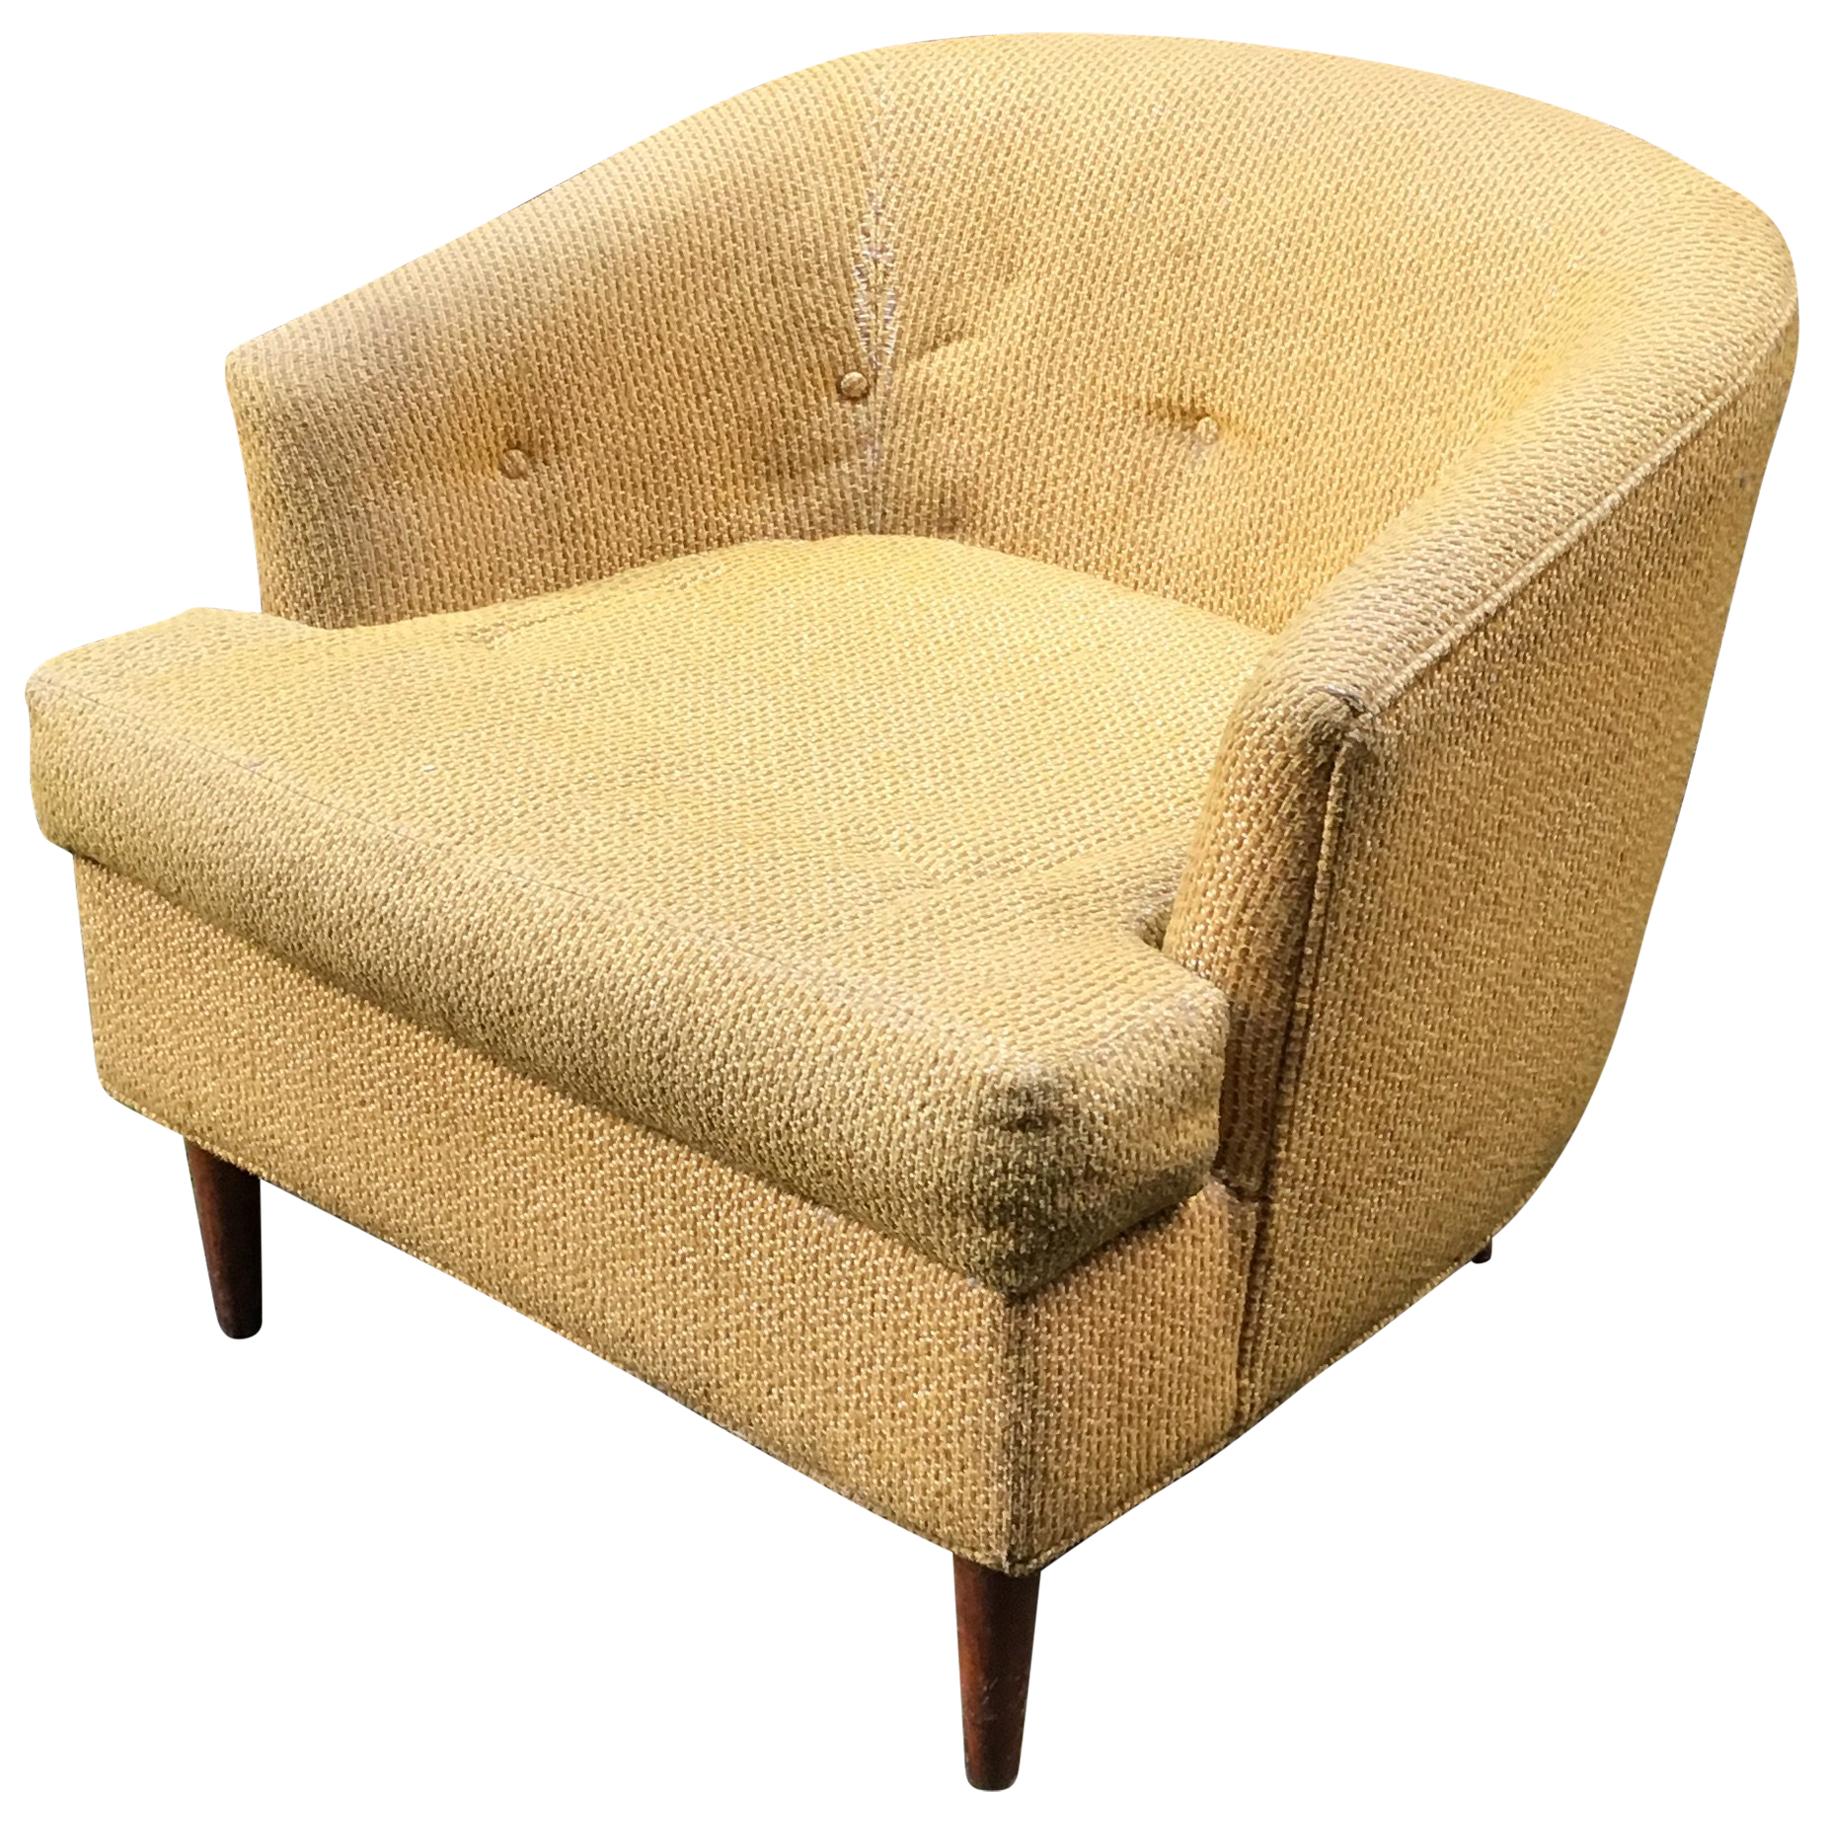 Diminutive 1960s Selig Lounge Chair